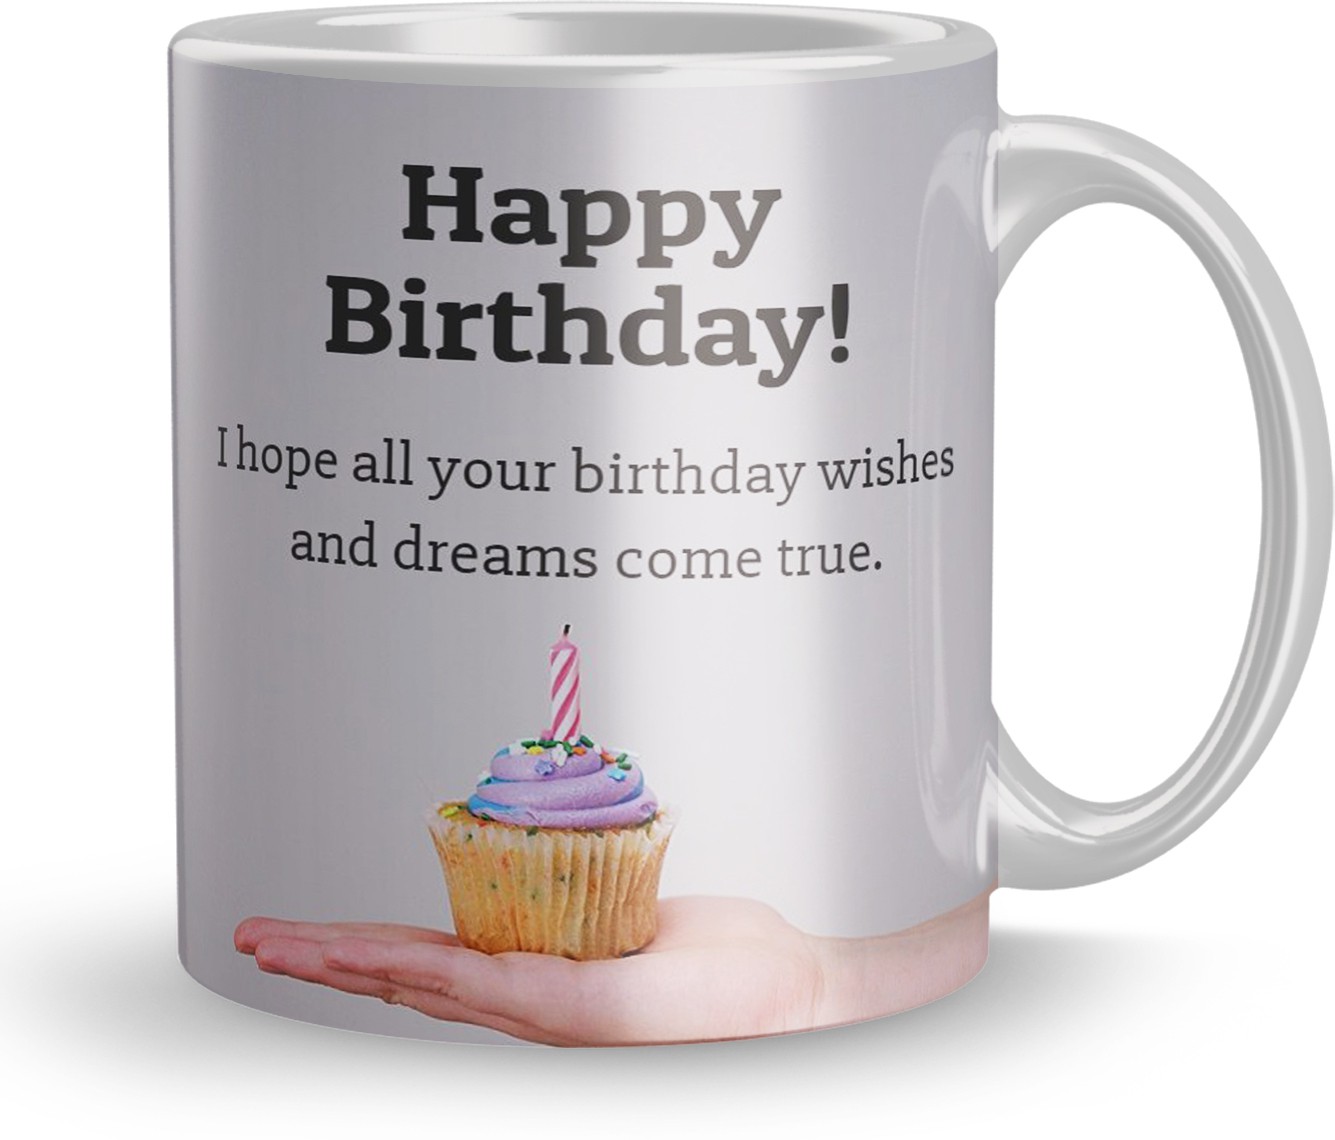 The best gift hamper for any girls birthday - Celebrating You